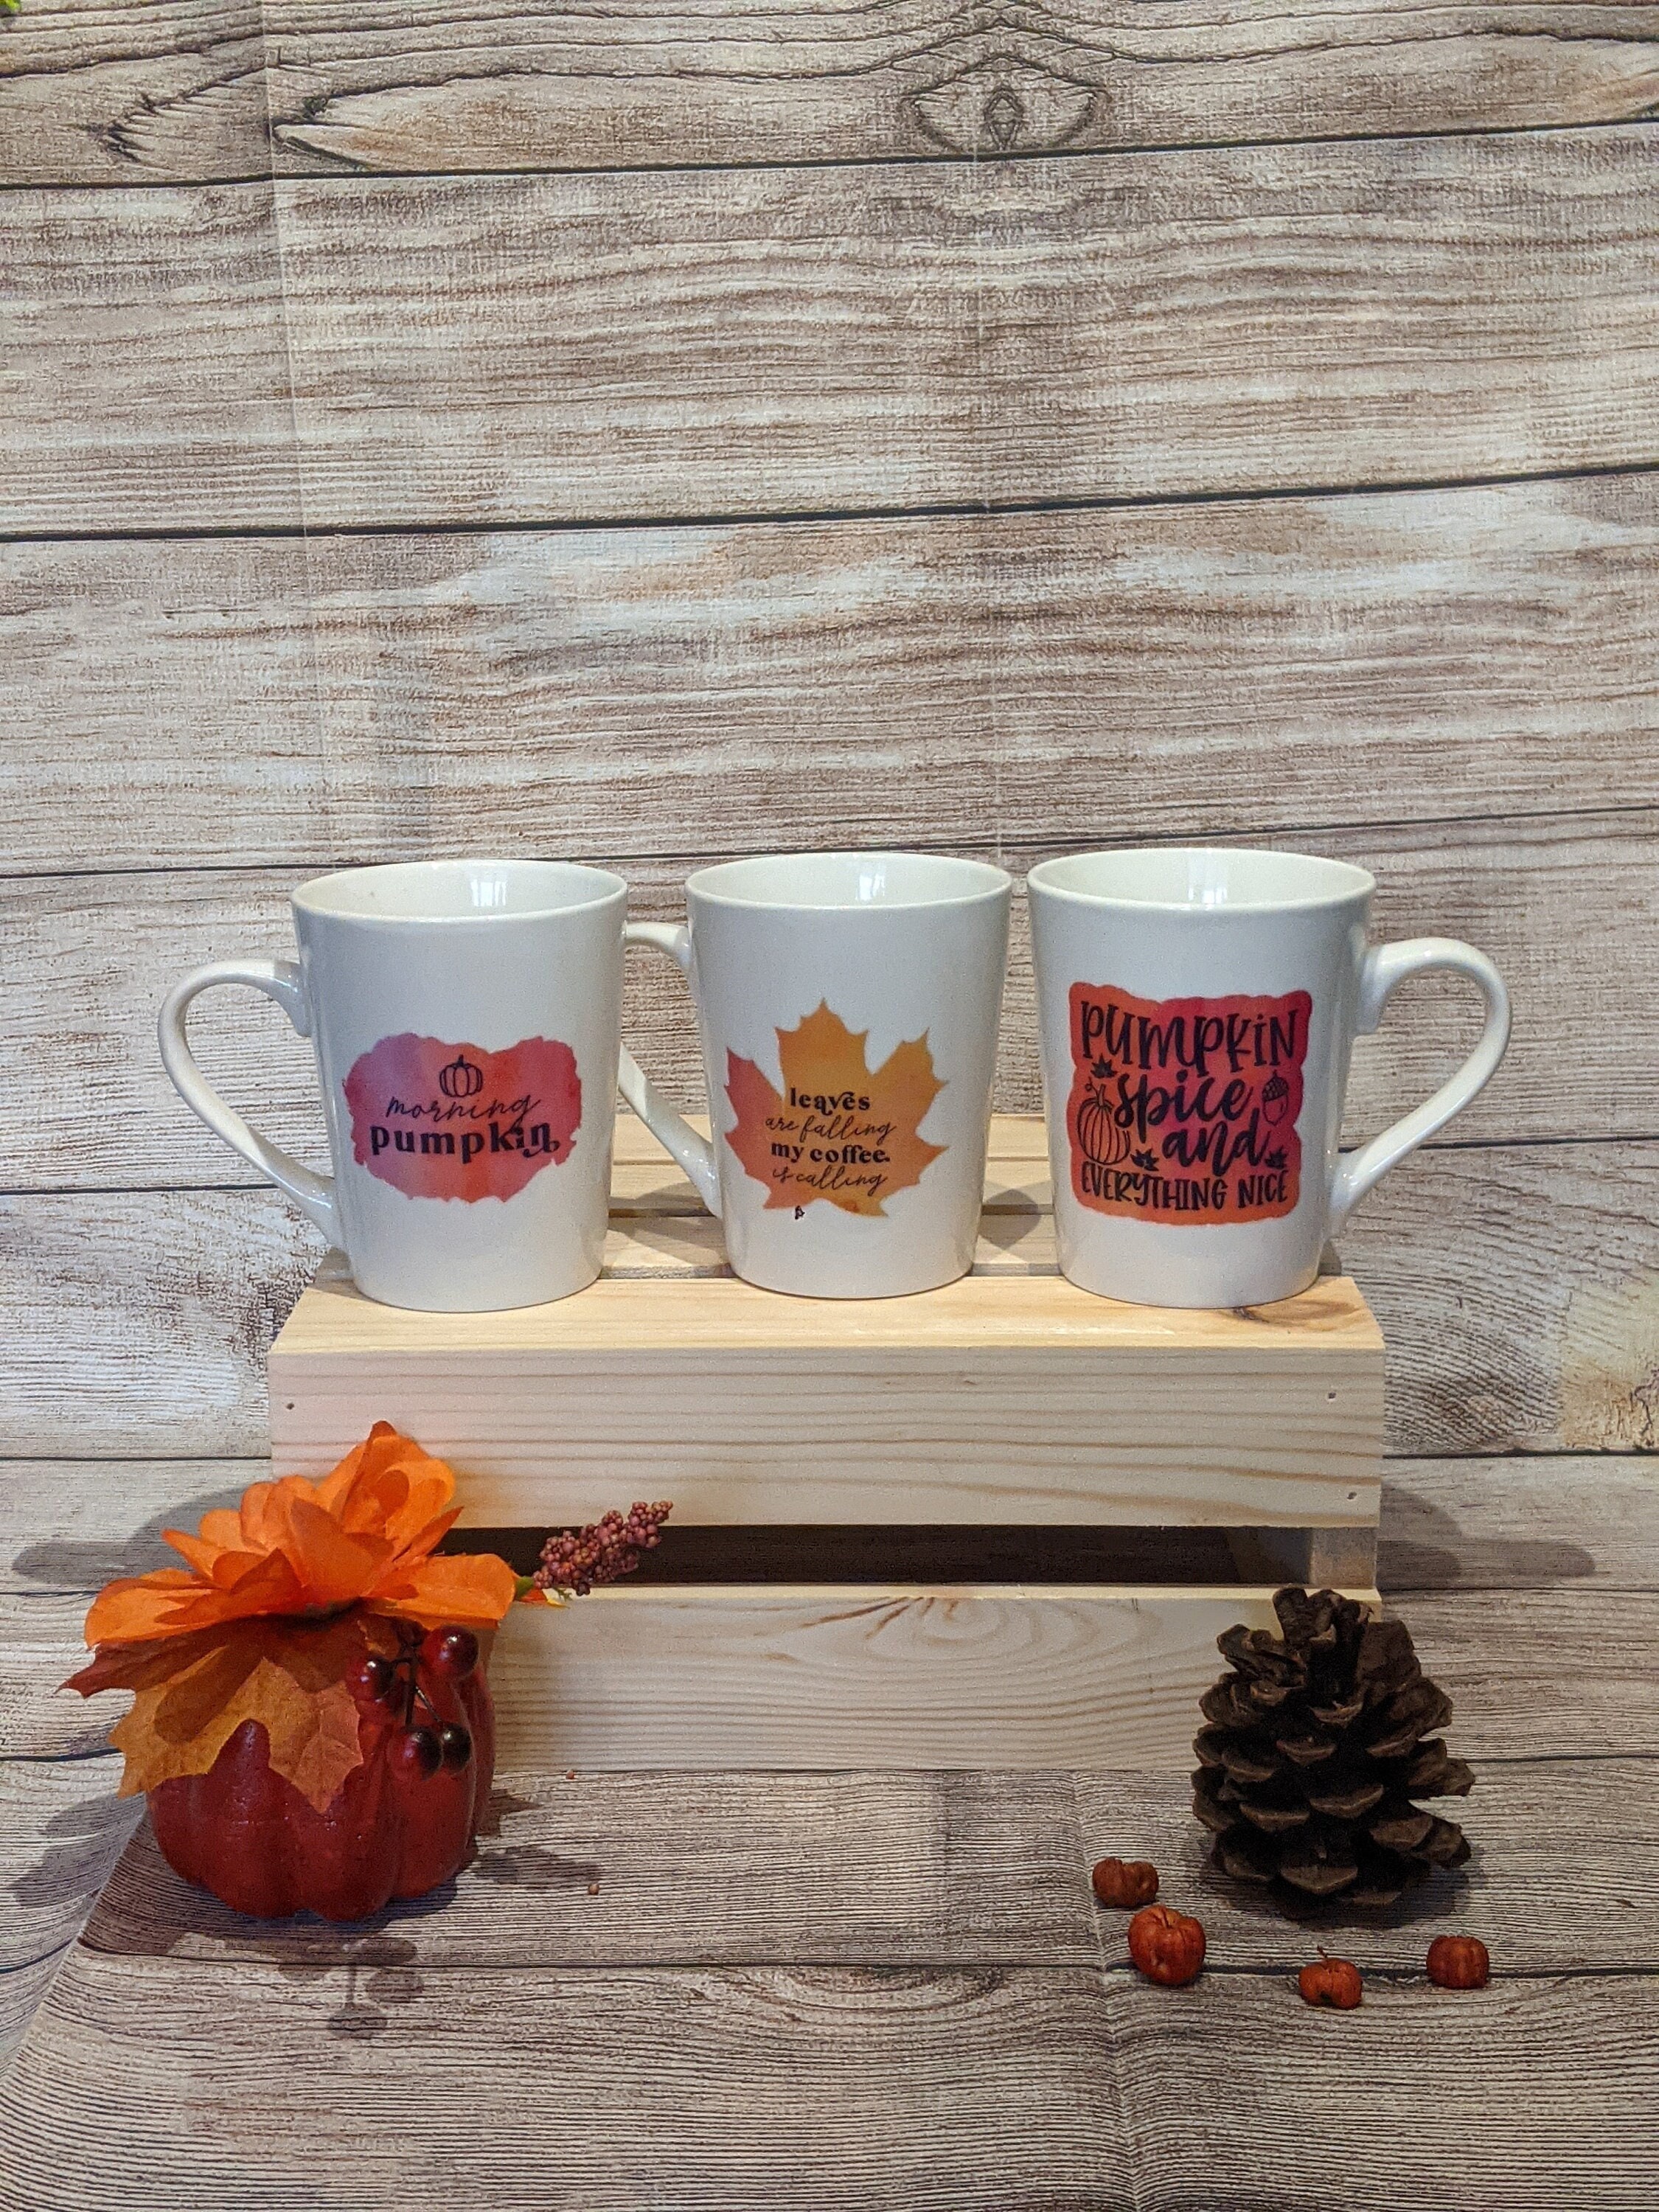 Personalized 14oz Ember Mug, Temperature Control Smart Mug, App Controlled  Heated Coffee Mug, Coffee Lover Gift, Custom Engraved Gift 